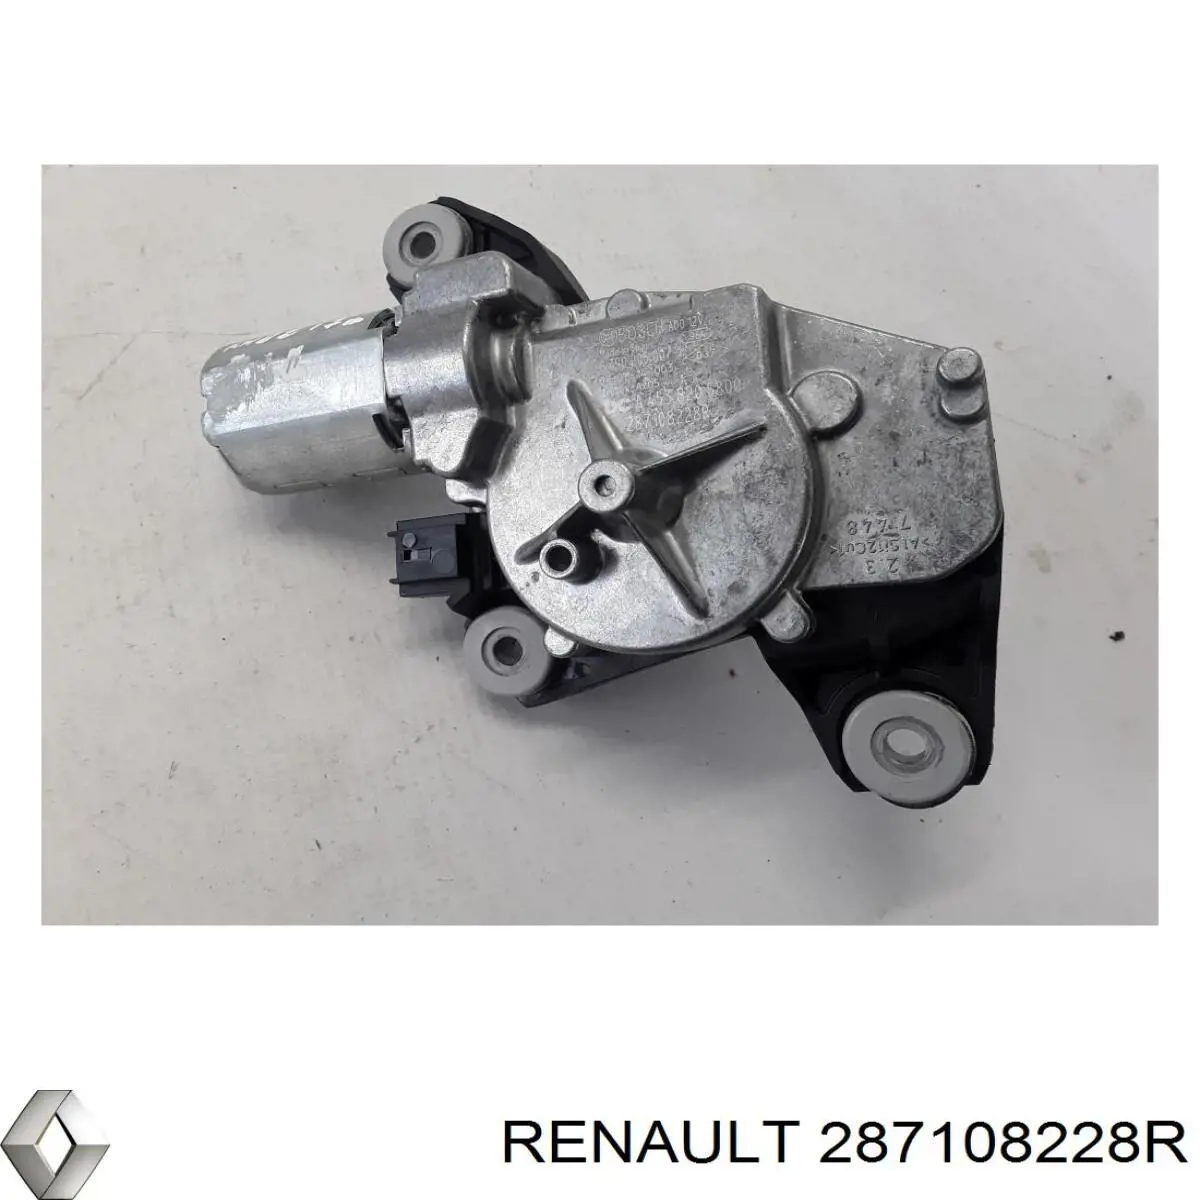 287108228R Renault (RVI) motor limpiaparabrisas, trasera